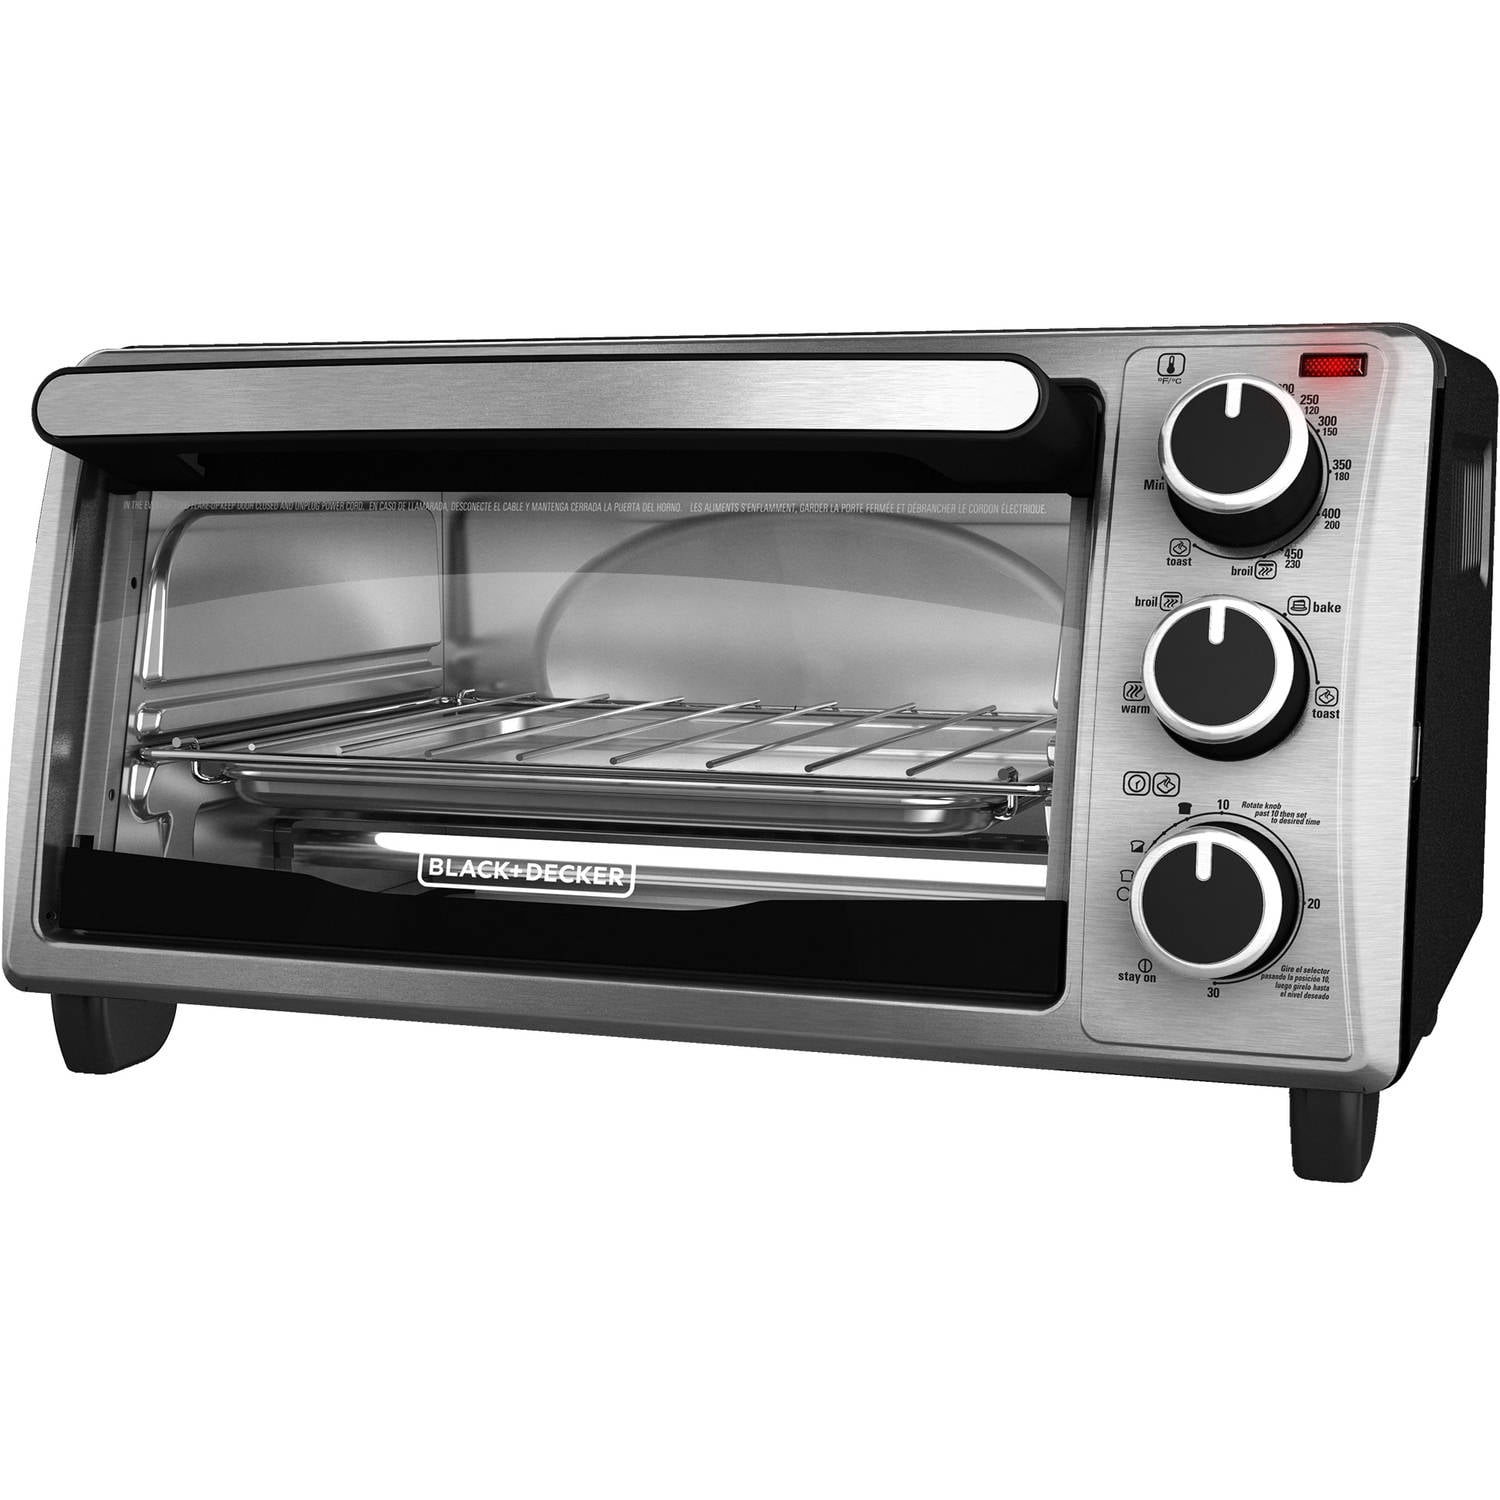 Black & Decker 4 Slice Toaster Oven - American Stores